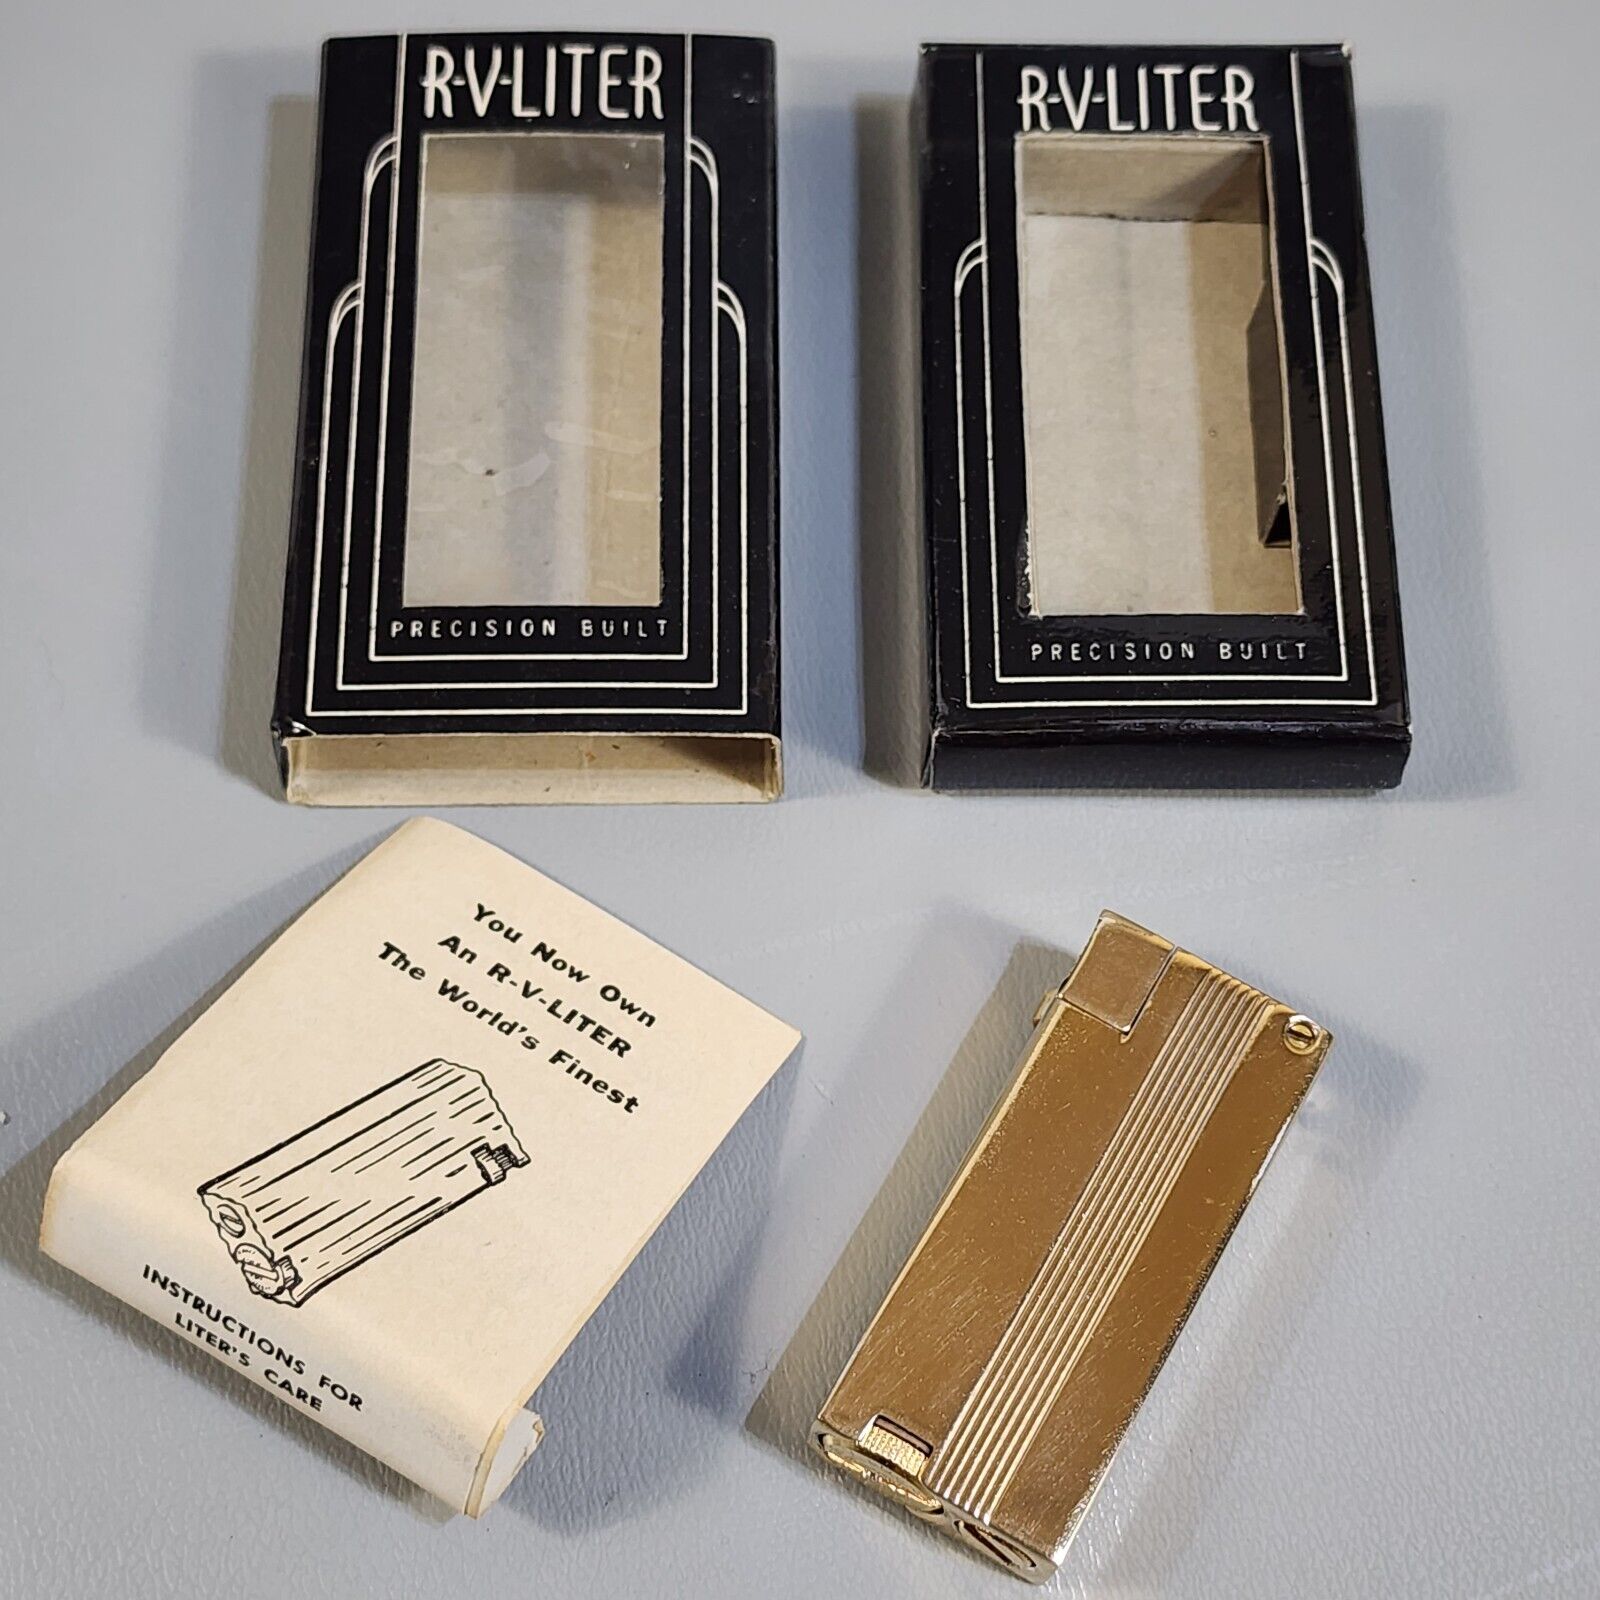 Vintage Arvey RV LITER Flint Fluid Lighter Original Design Gold Tone Aluminum